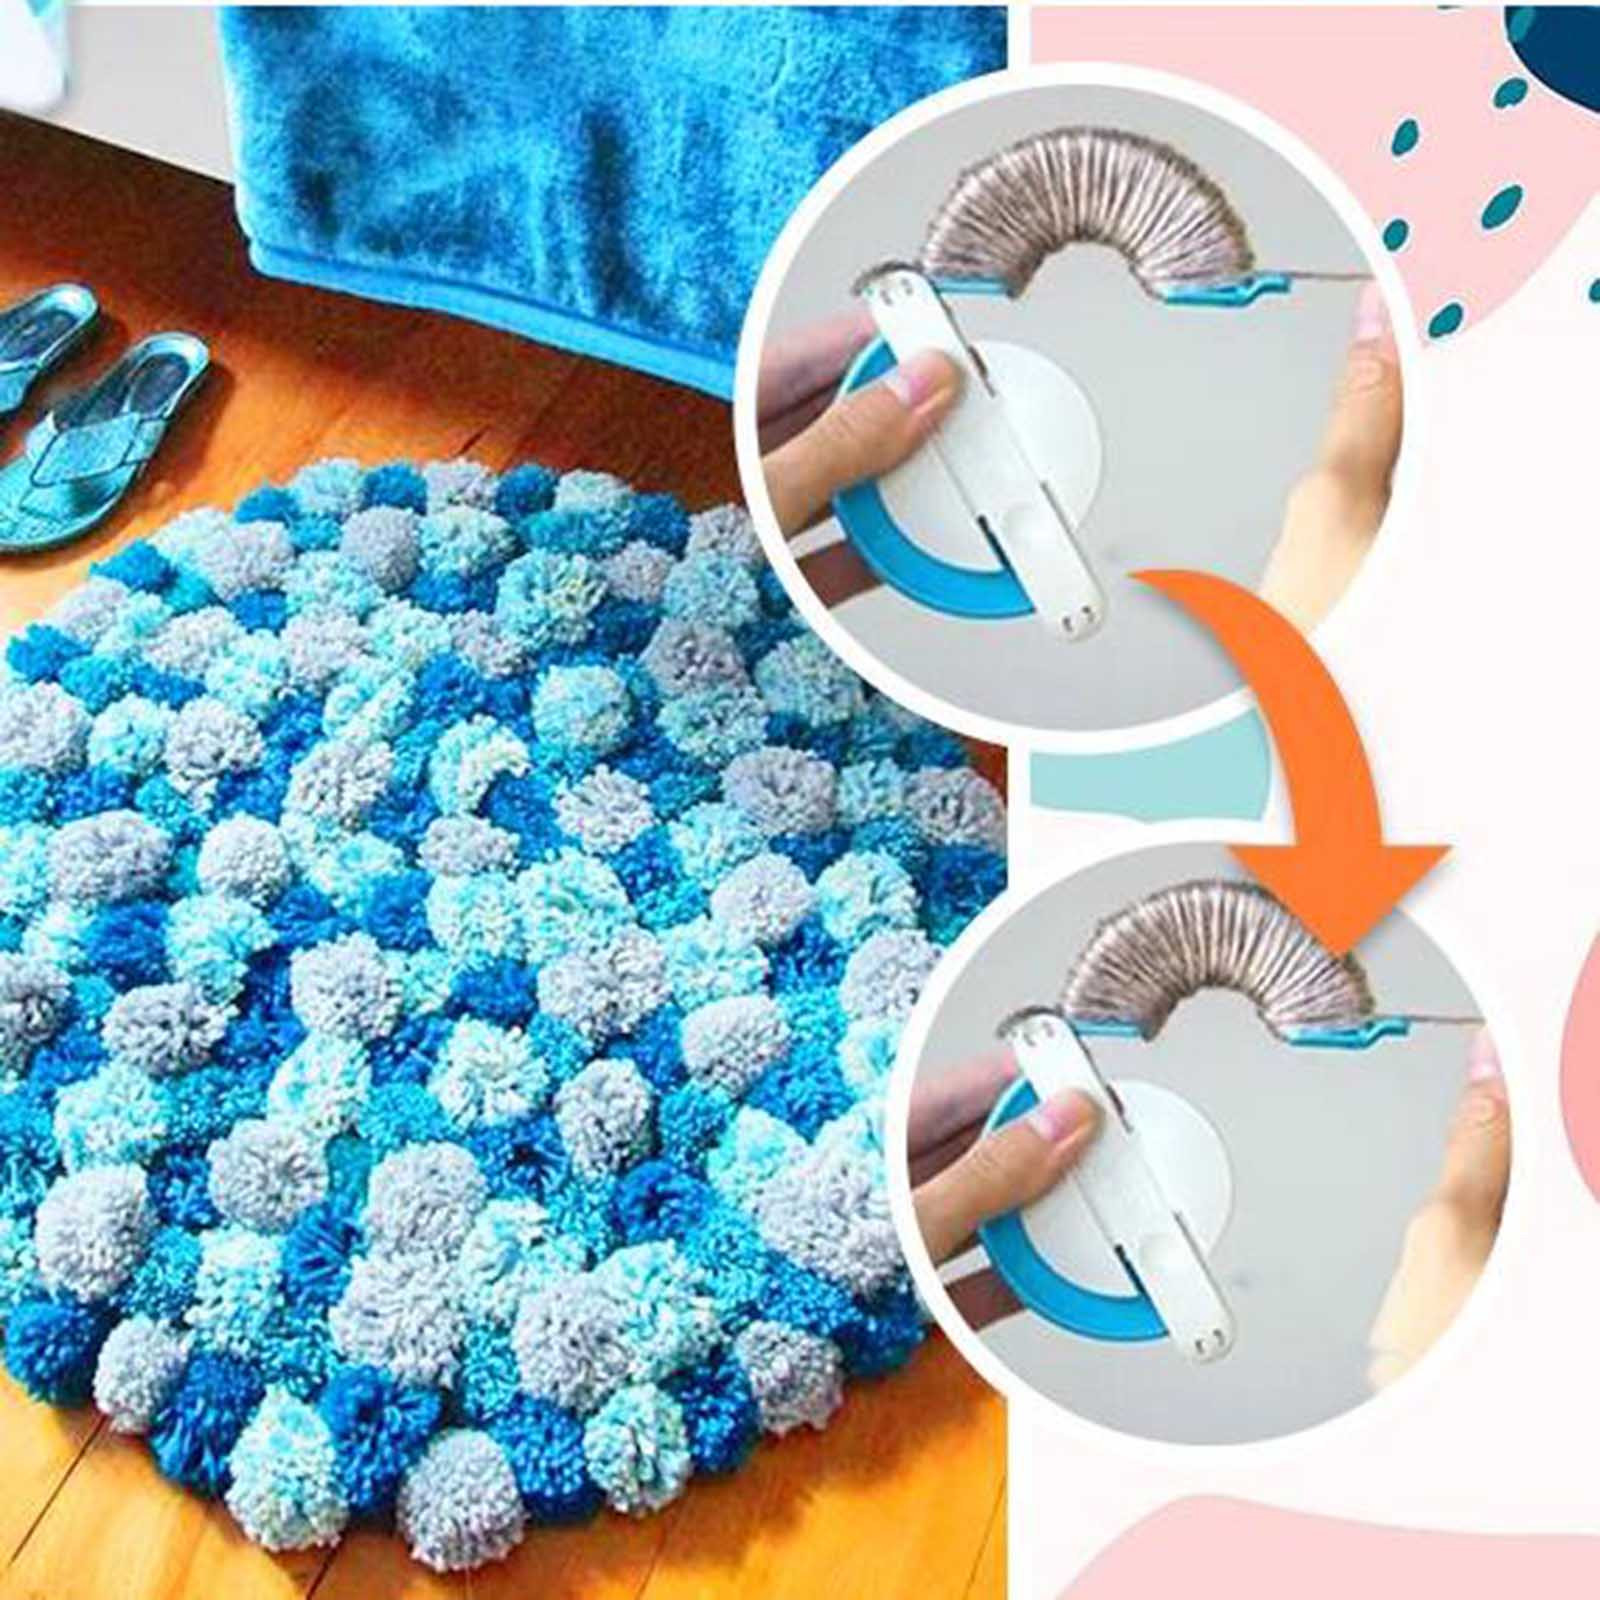 4pcs 4 Sizes Pom Pom Maker Kit DIY Plastic Fluff Ball Weaver Needle Knit Craft Pompon Tool Knitting Tool Sewing Supplies Craft